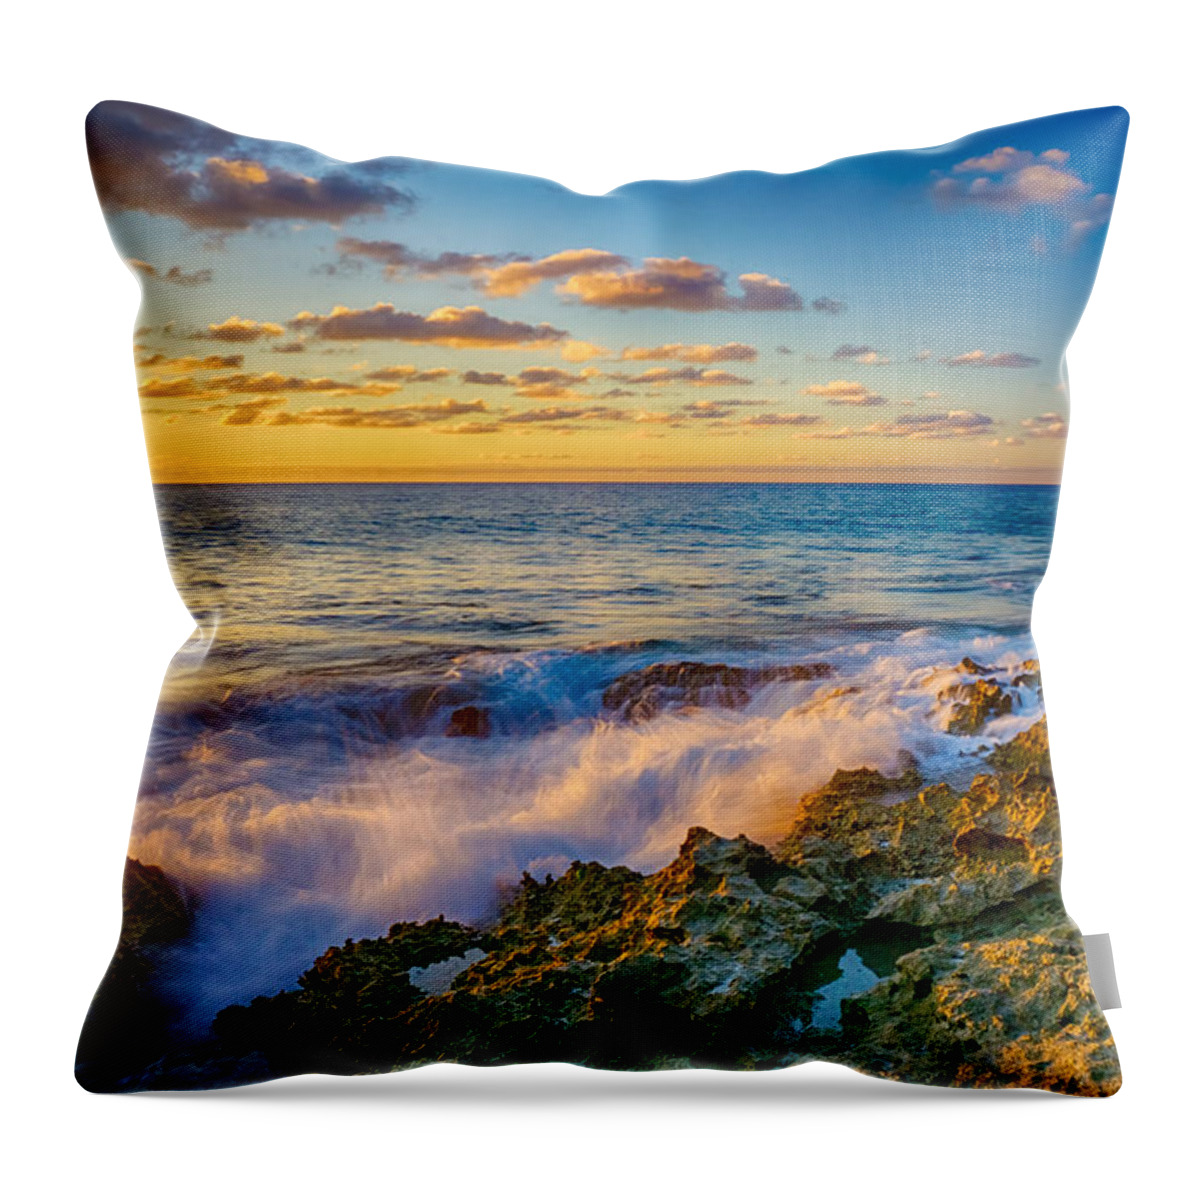 Pristine Throw Pillow featuring the photograph A Splashy Sunset by Amanda Jones